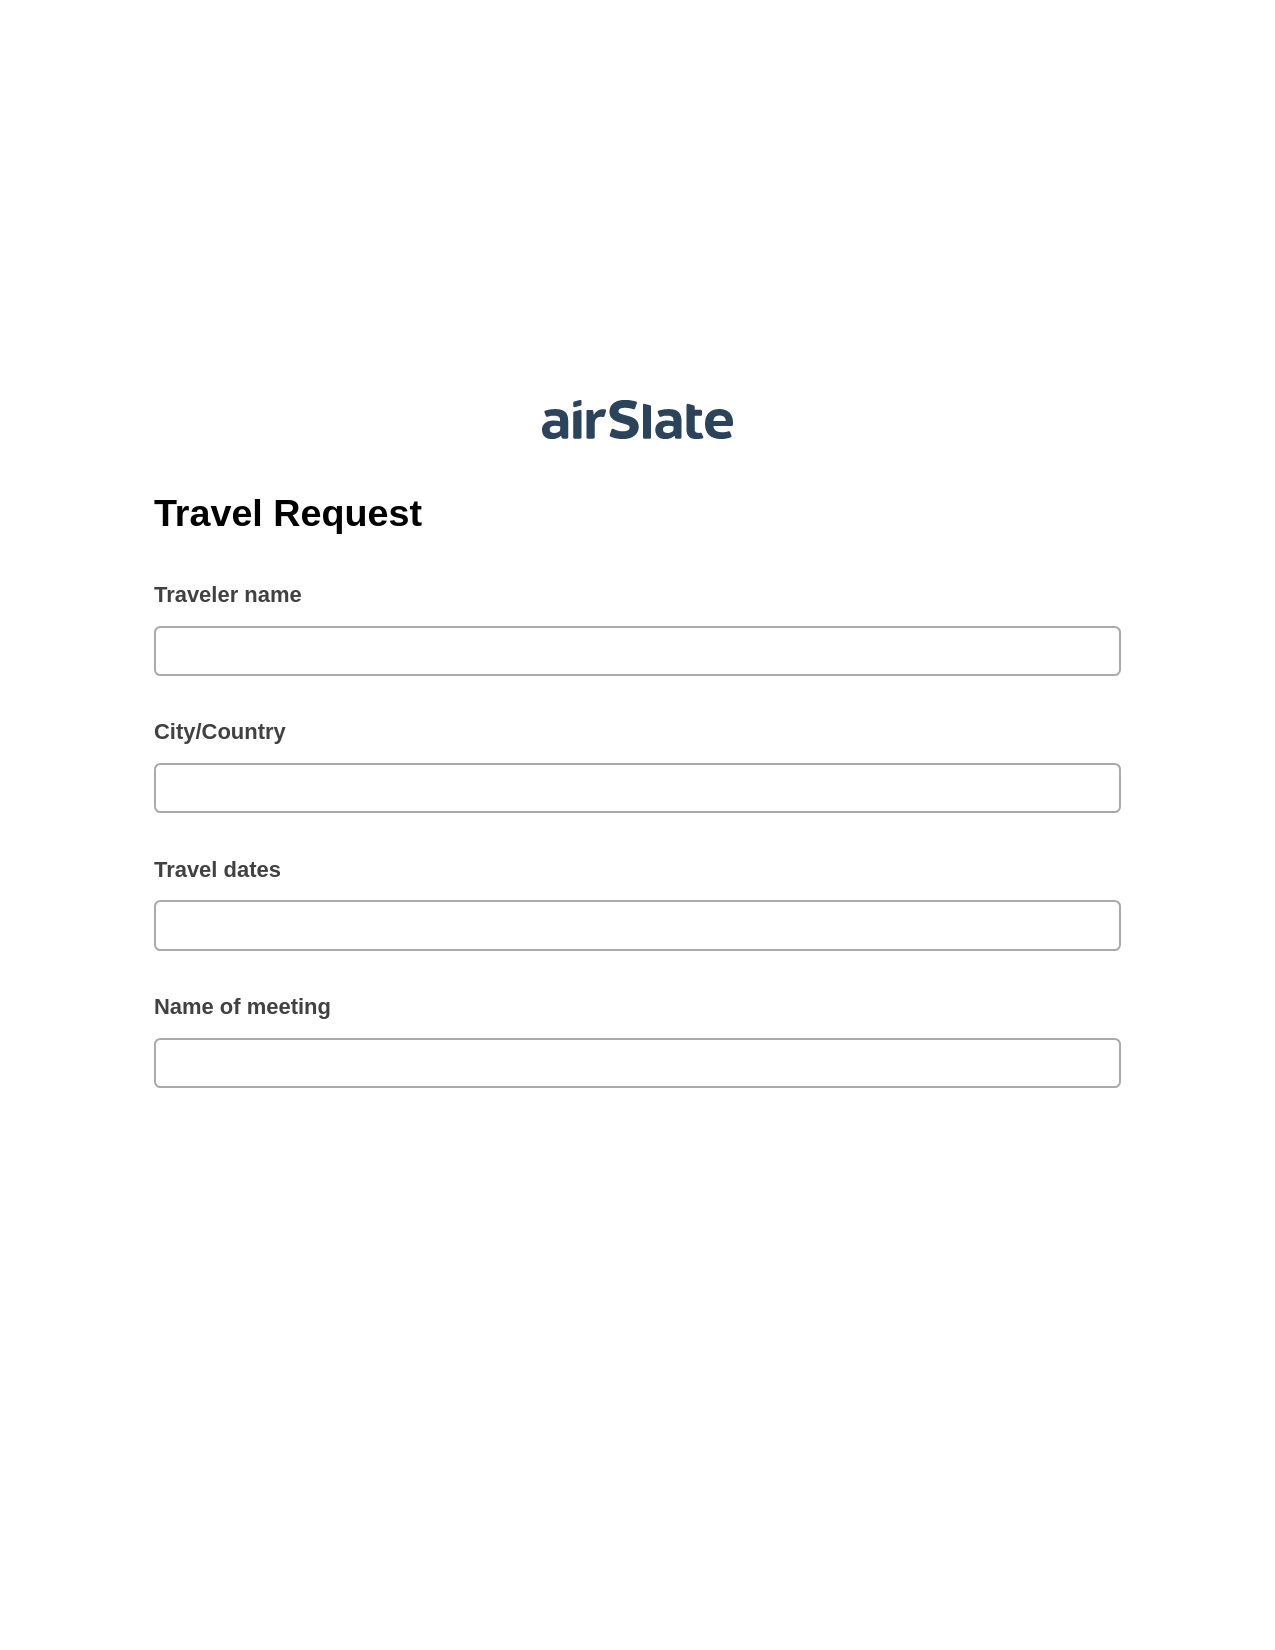 Multirole Travel Request Pre-fill from CSV File Bot, Webhook Bot, Dropbox Bot